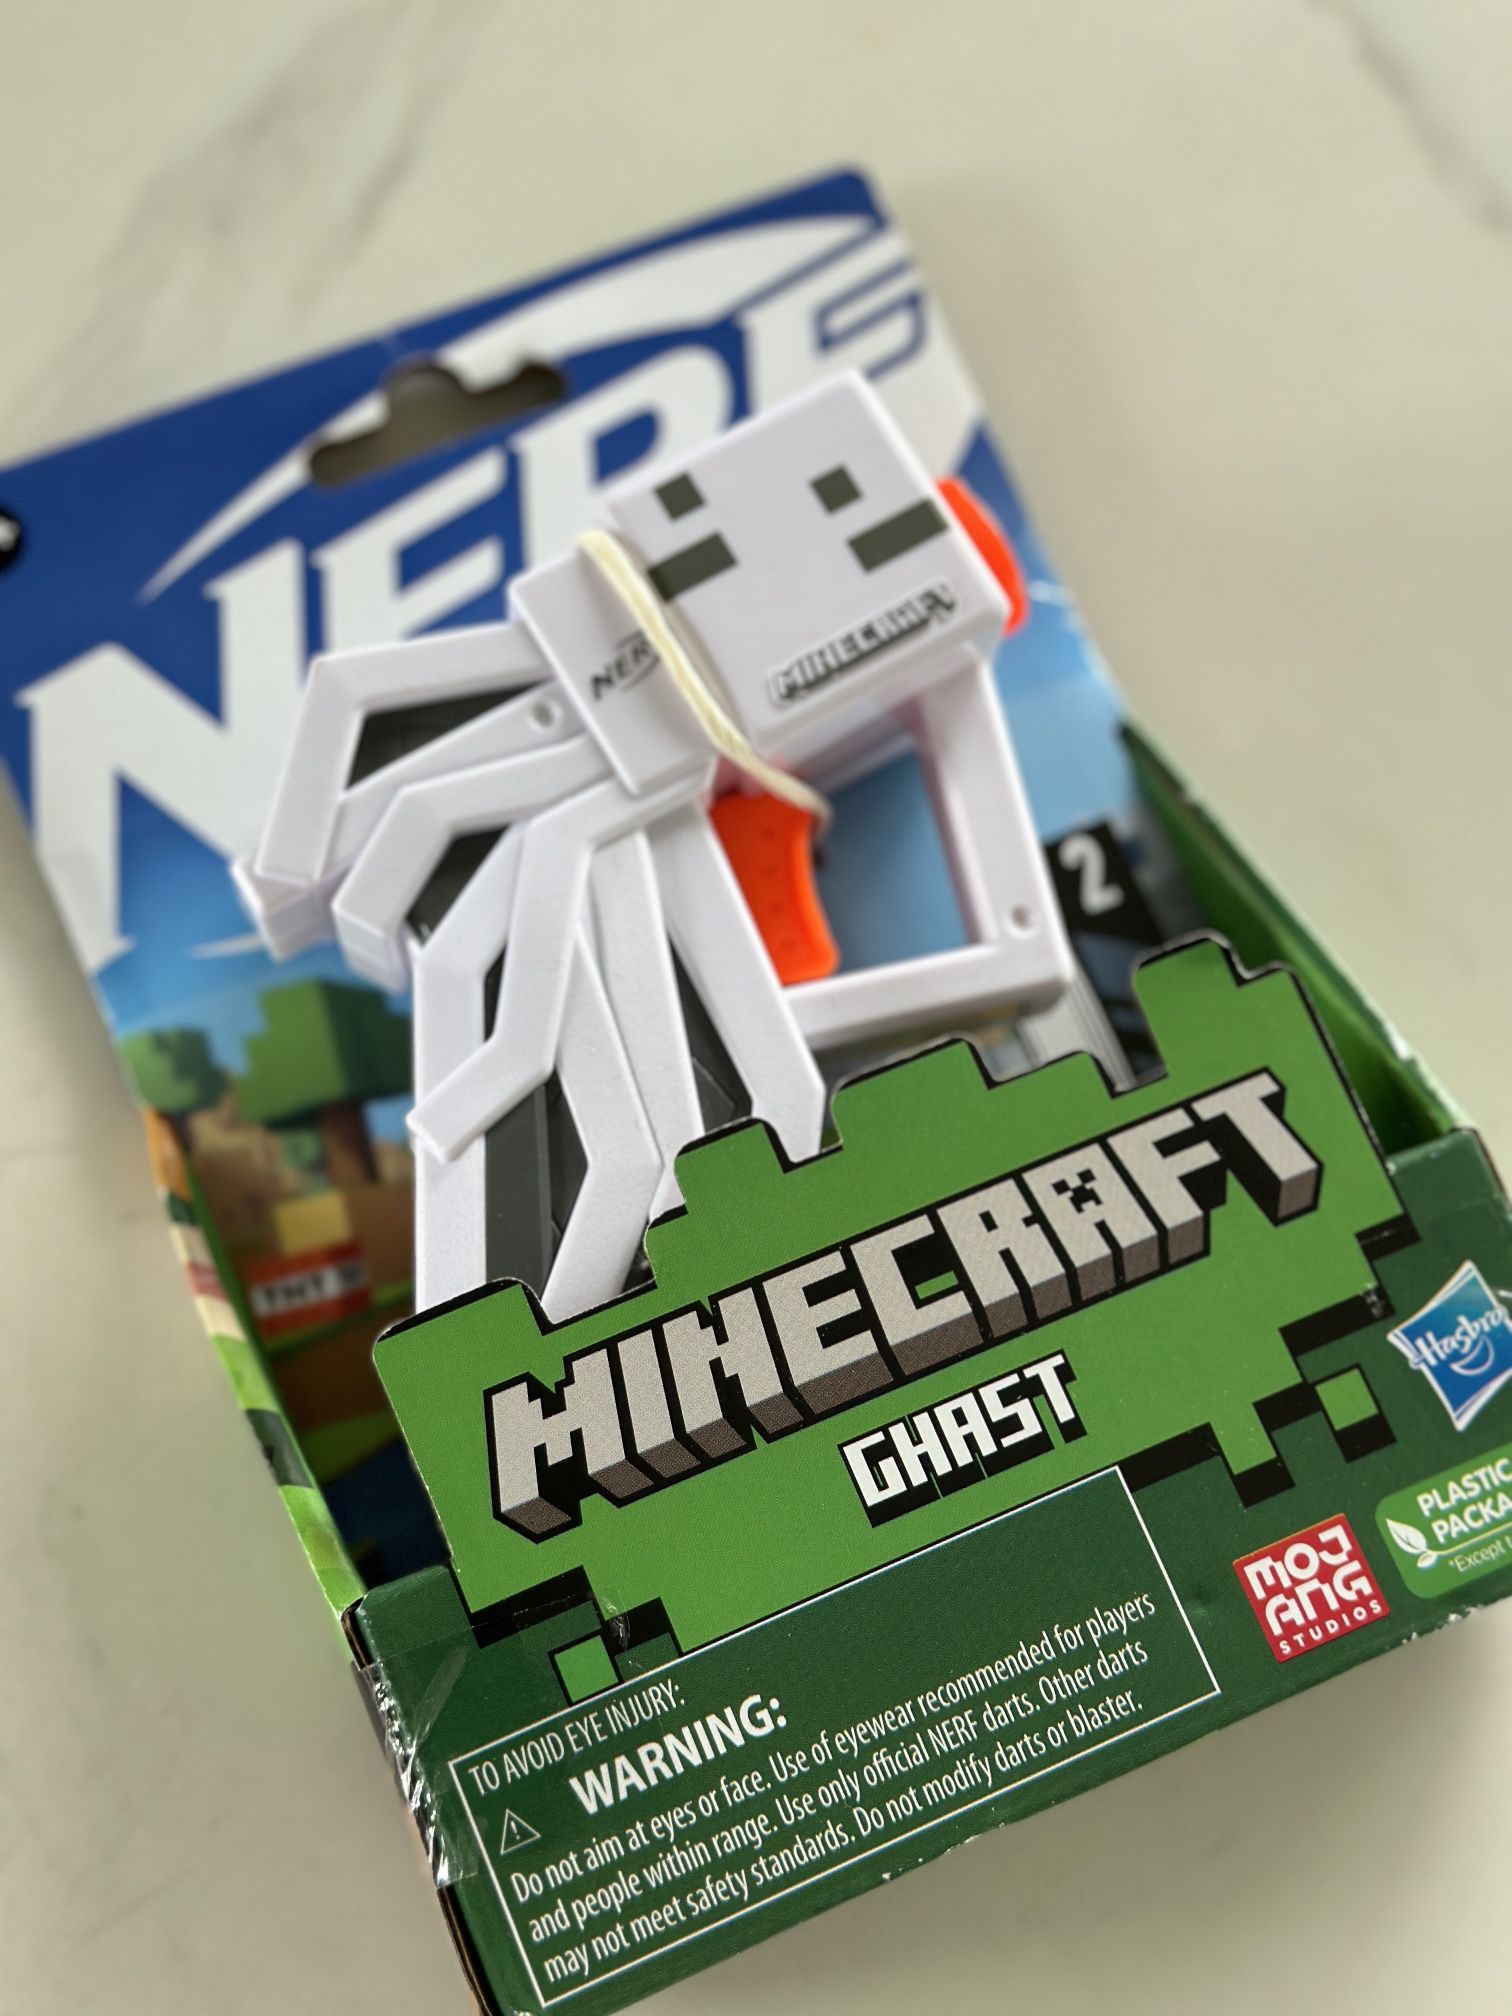 Nerf MicroShots Minecraft Ender Dragon Mini Foam Dart Blaster Toy Gun Ghast New